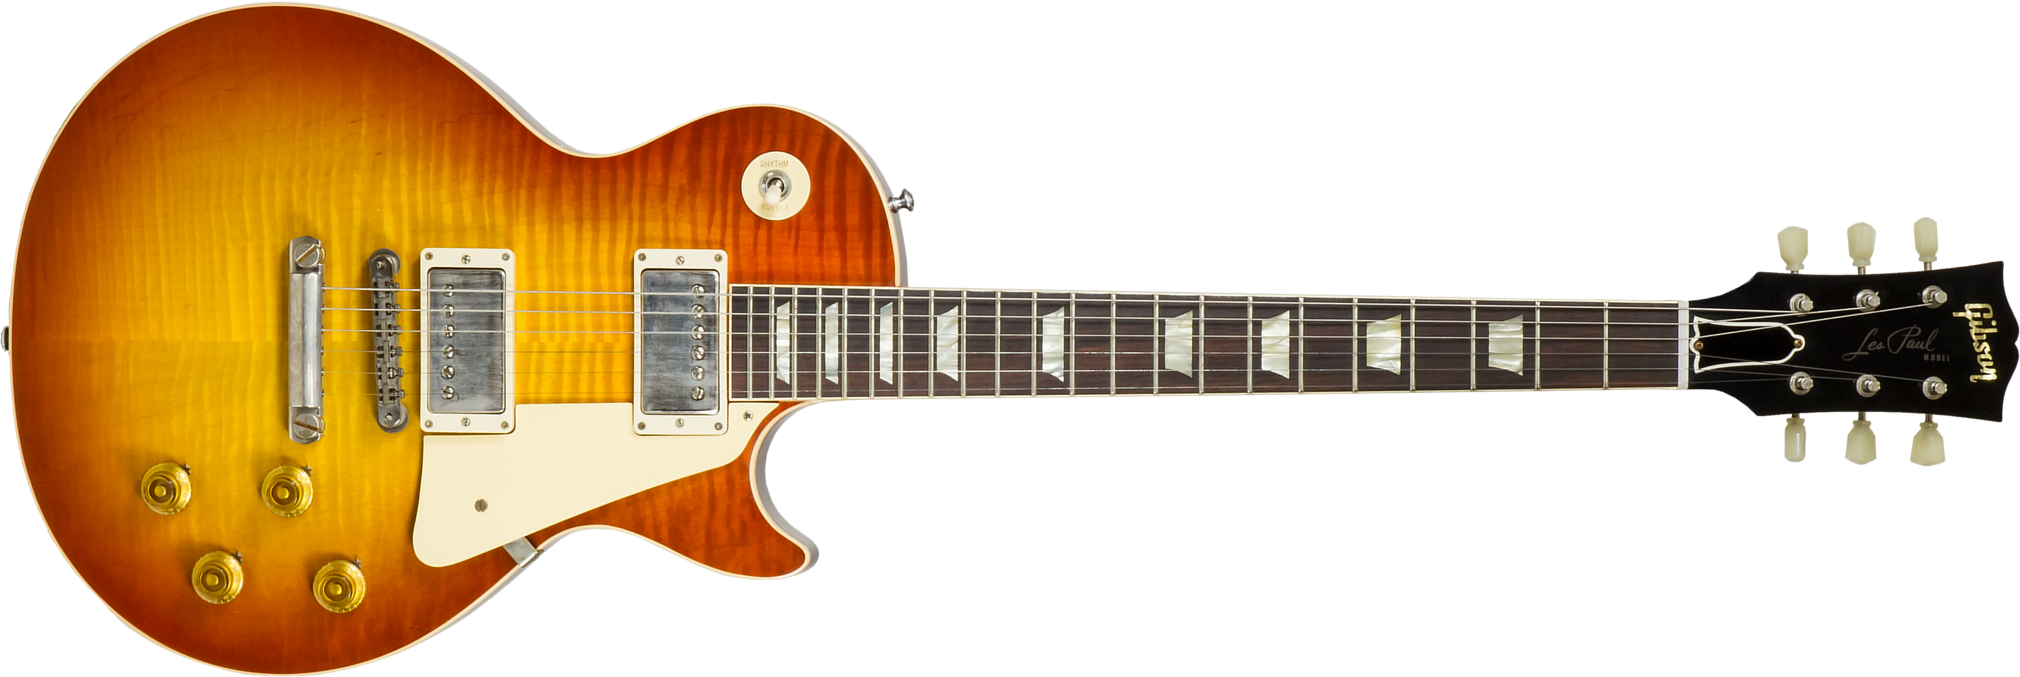 Gibson Custom Shop Les Paul Standard 1960 V1 60th Anniversary #001496 - Vos Antiquity Burst - Single-Cut-E-Gitarre - Main picture